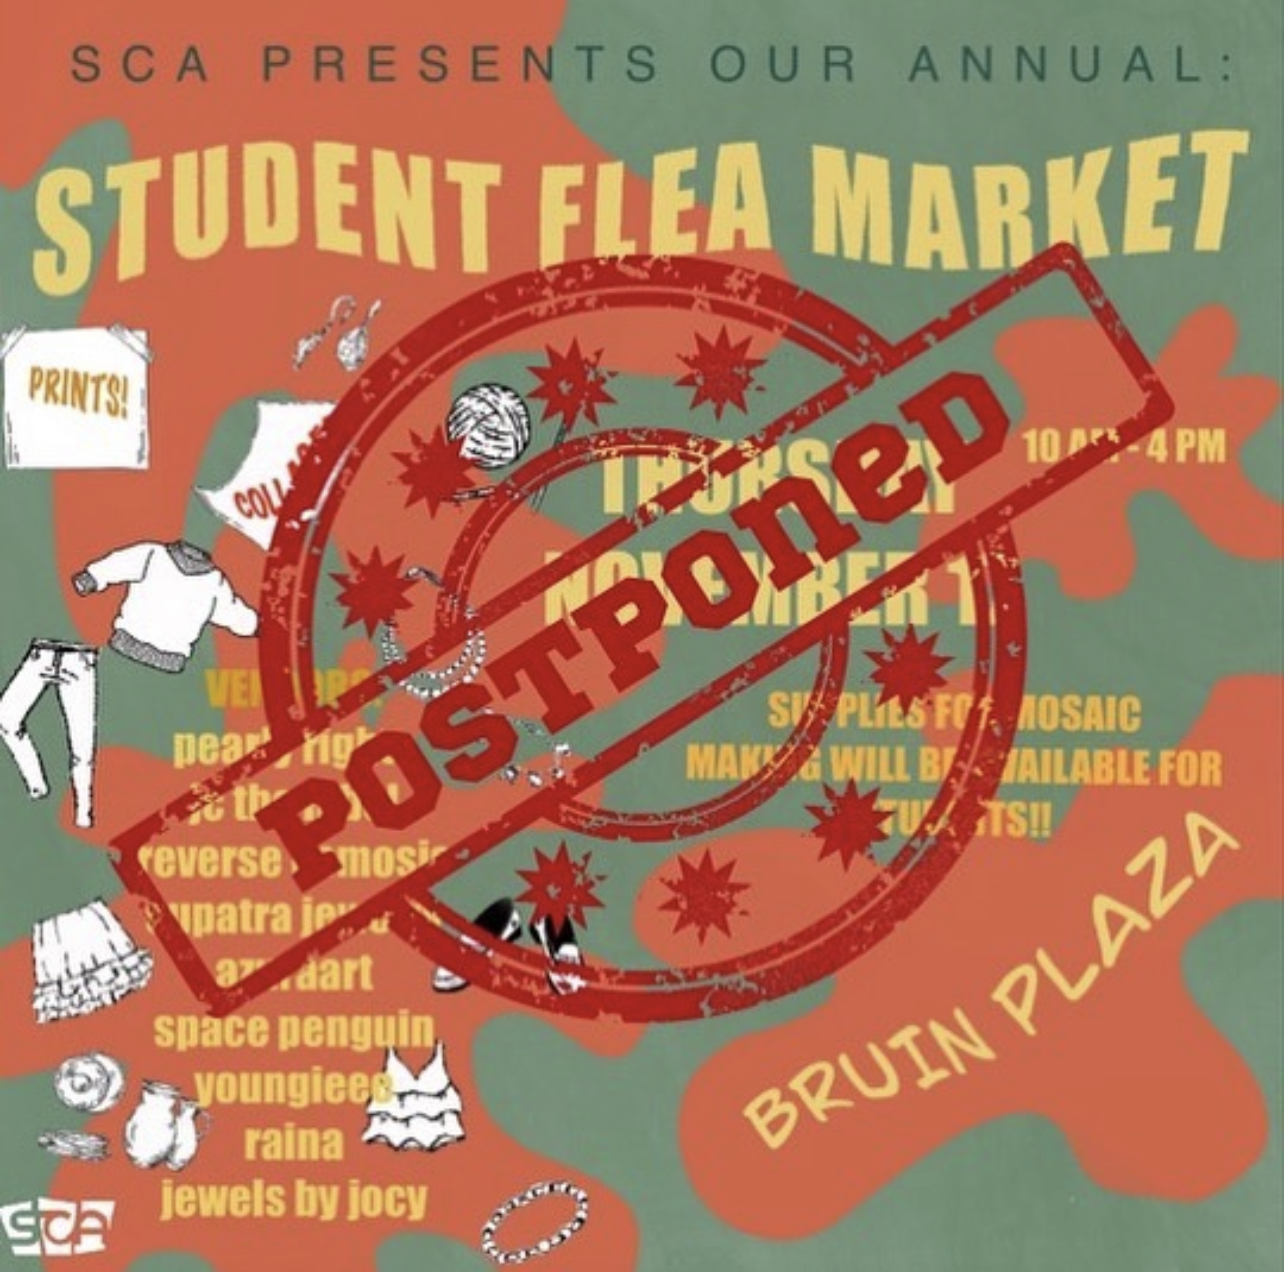 Student Flea Market POSTPONED